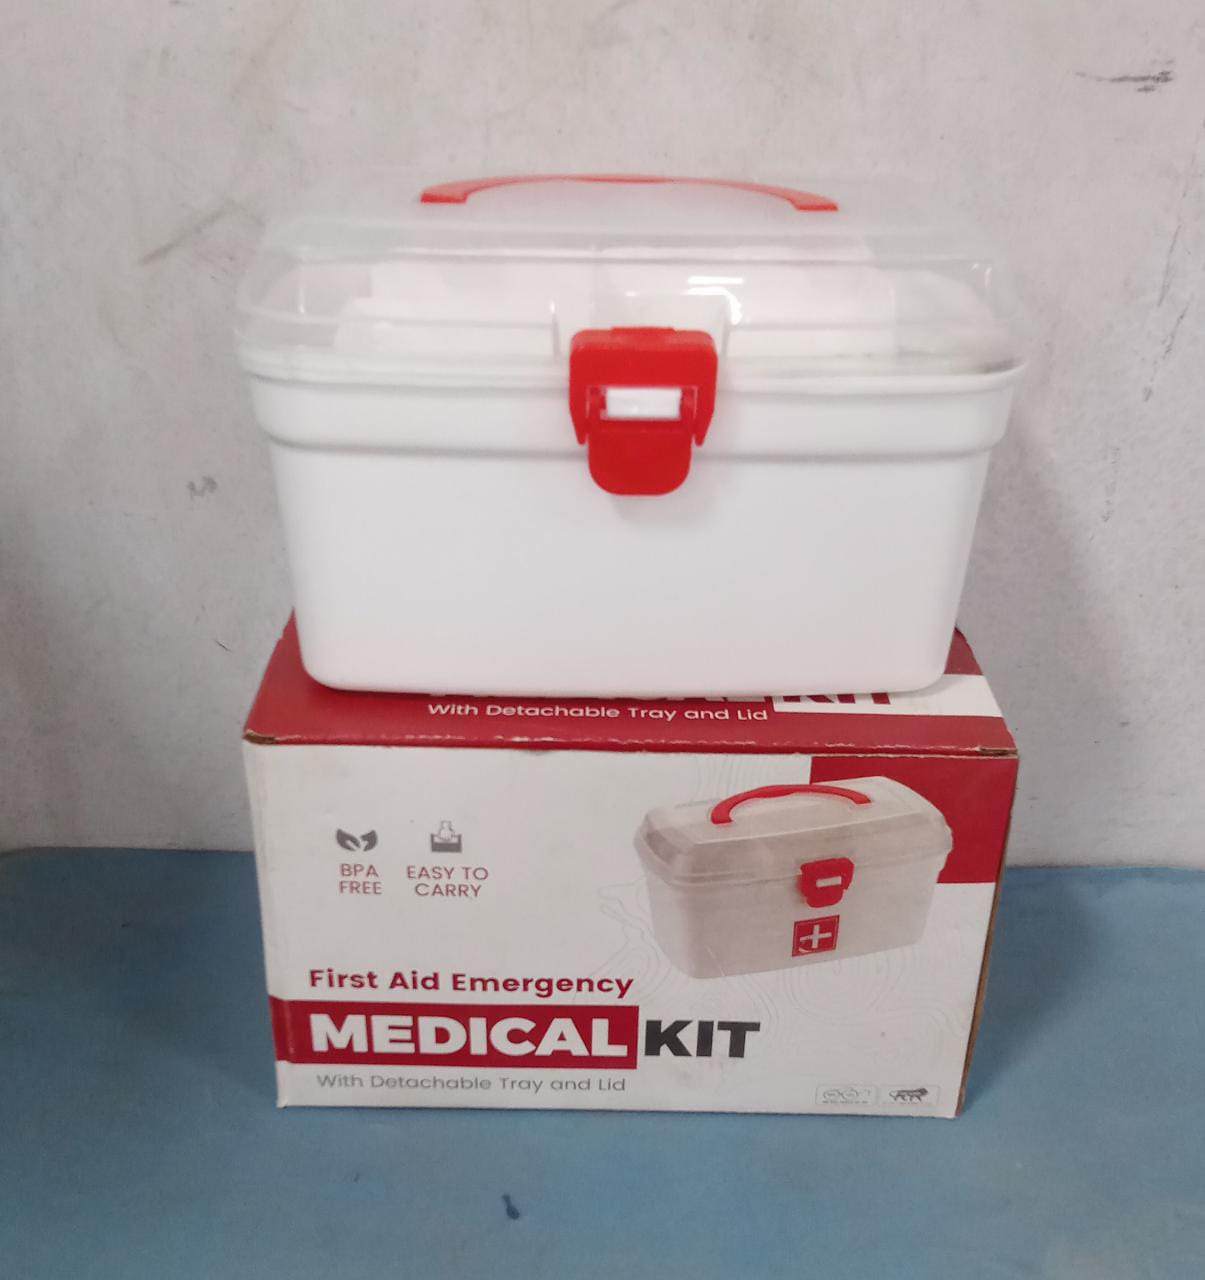 6412 Medical Box, 1 Piece,Indoor Outdoor Medical Utility,Medicine Storage Box,,Detachable Tray Medical Box Multi Purpose Regular Medicine, First Aid Box with Handle,